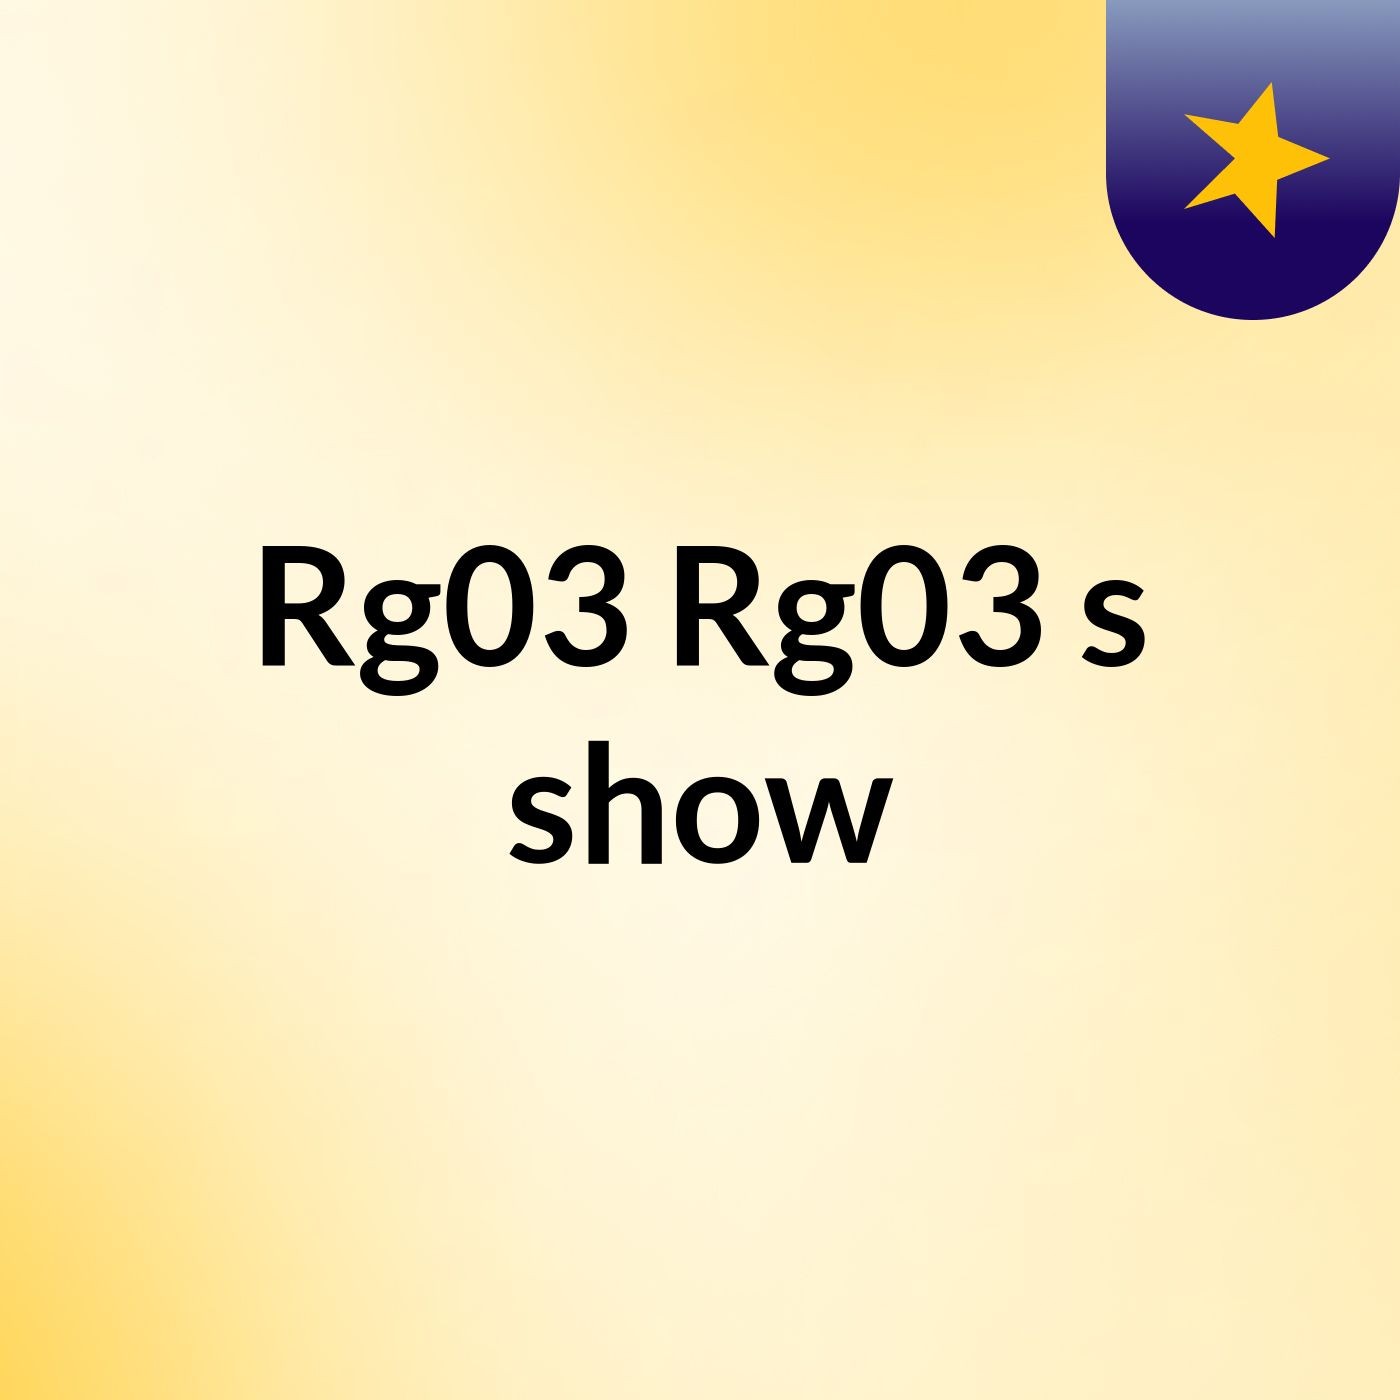 Rg03 Rg03's show